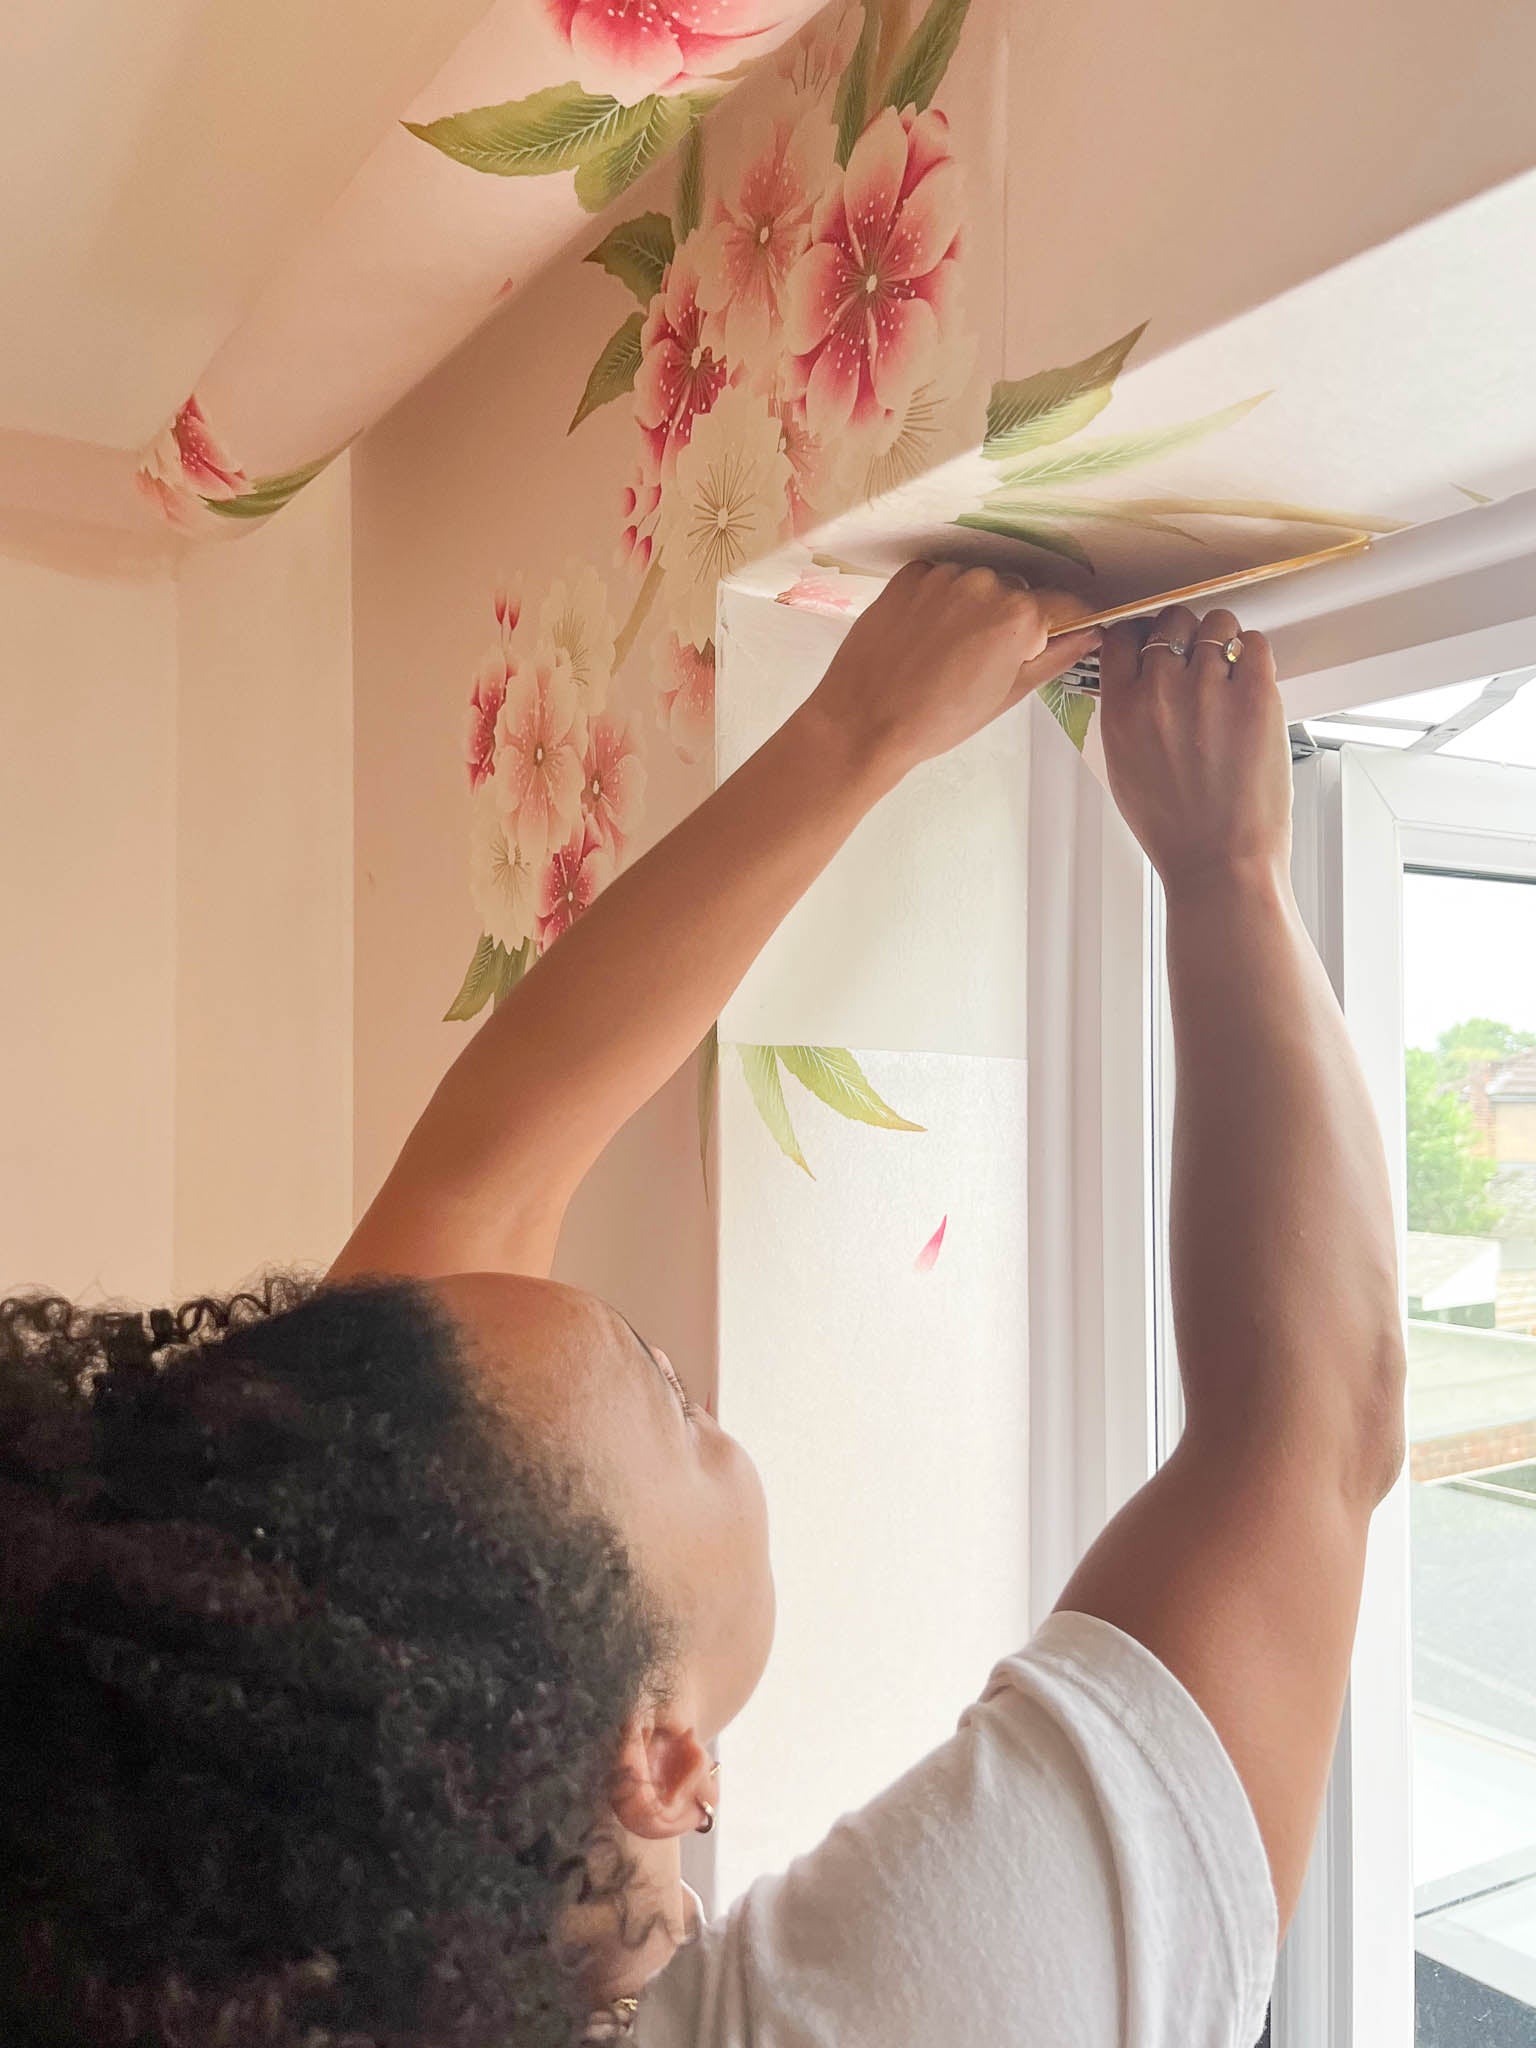 Diane Hill cutting her 'Rosa' wallpaper around the windows